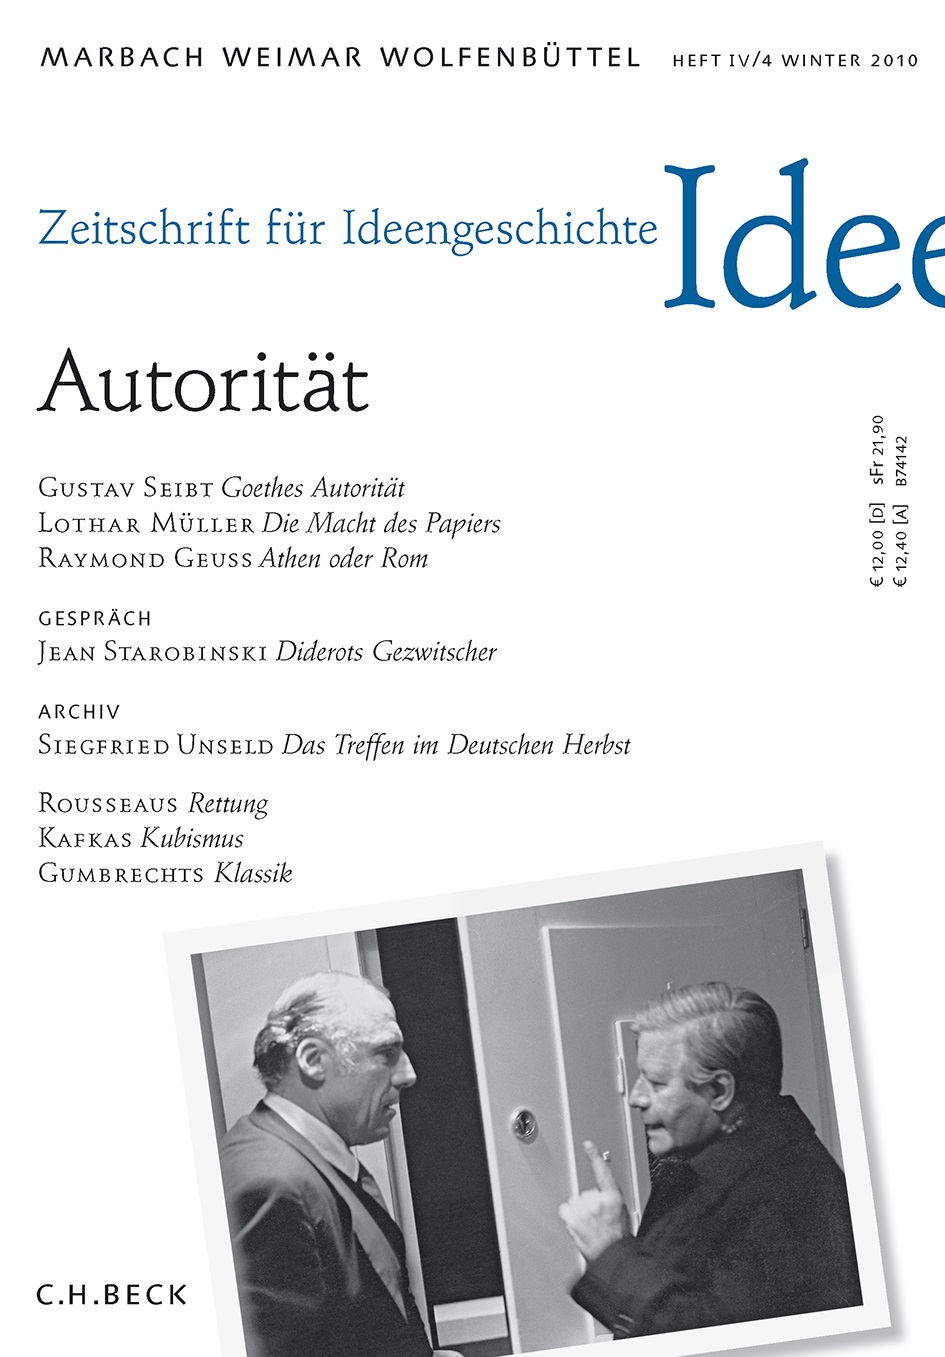 cover of Heft IV/4 Winter 2010